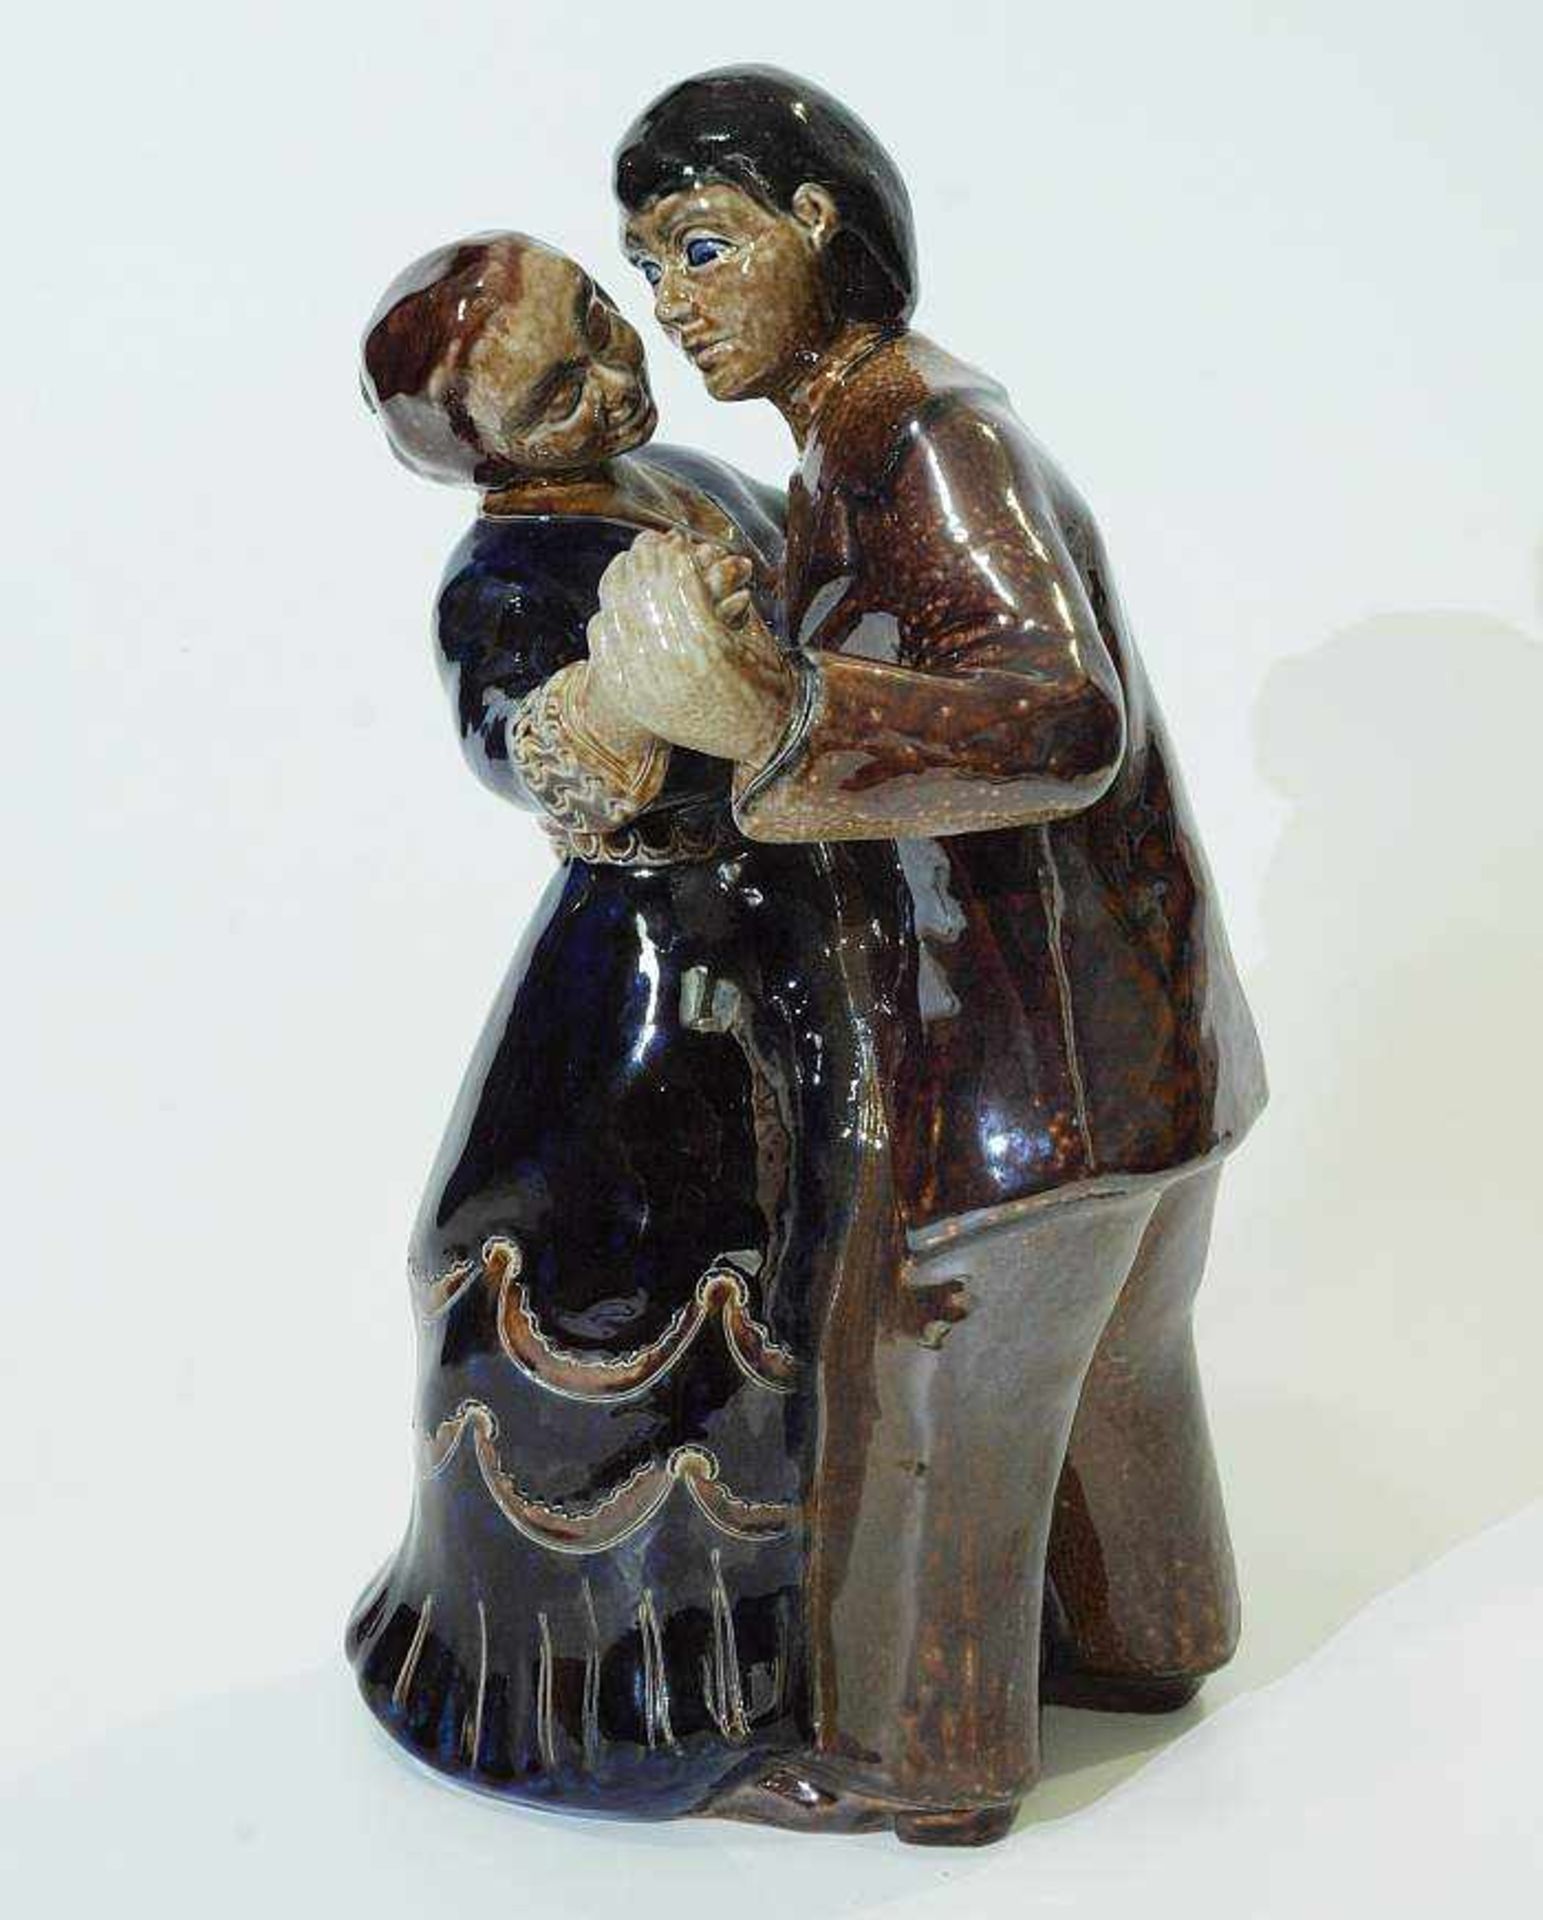 Tanzendes Paar. Tanzendes Paar. Westerwälder Keramik. 20. Jahrhundert. Handmodelliert. Salzglasur in